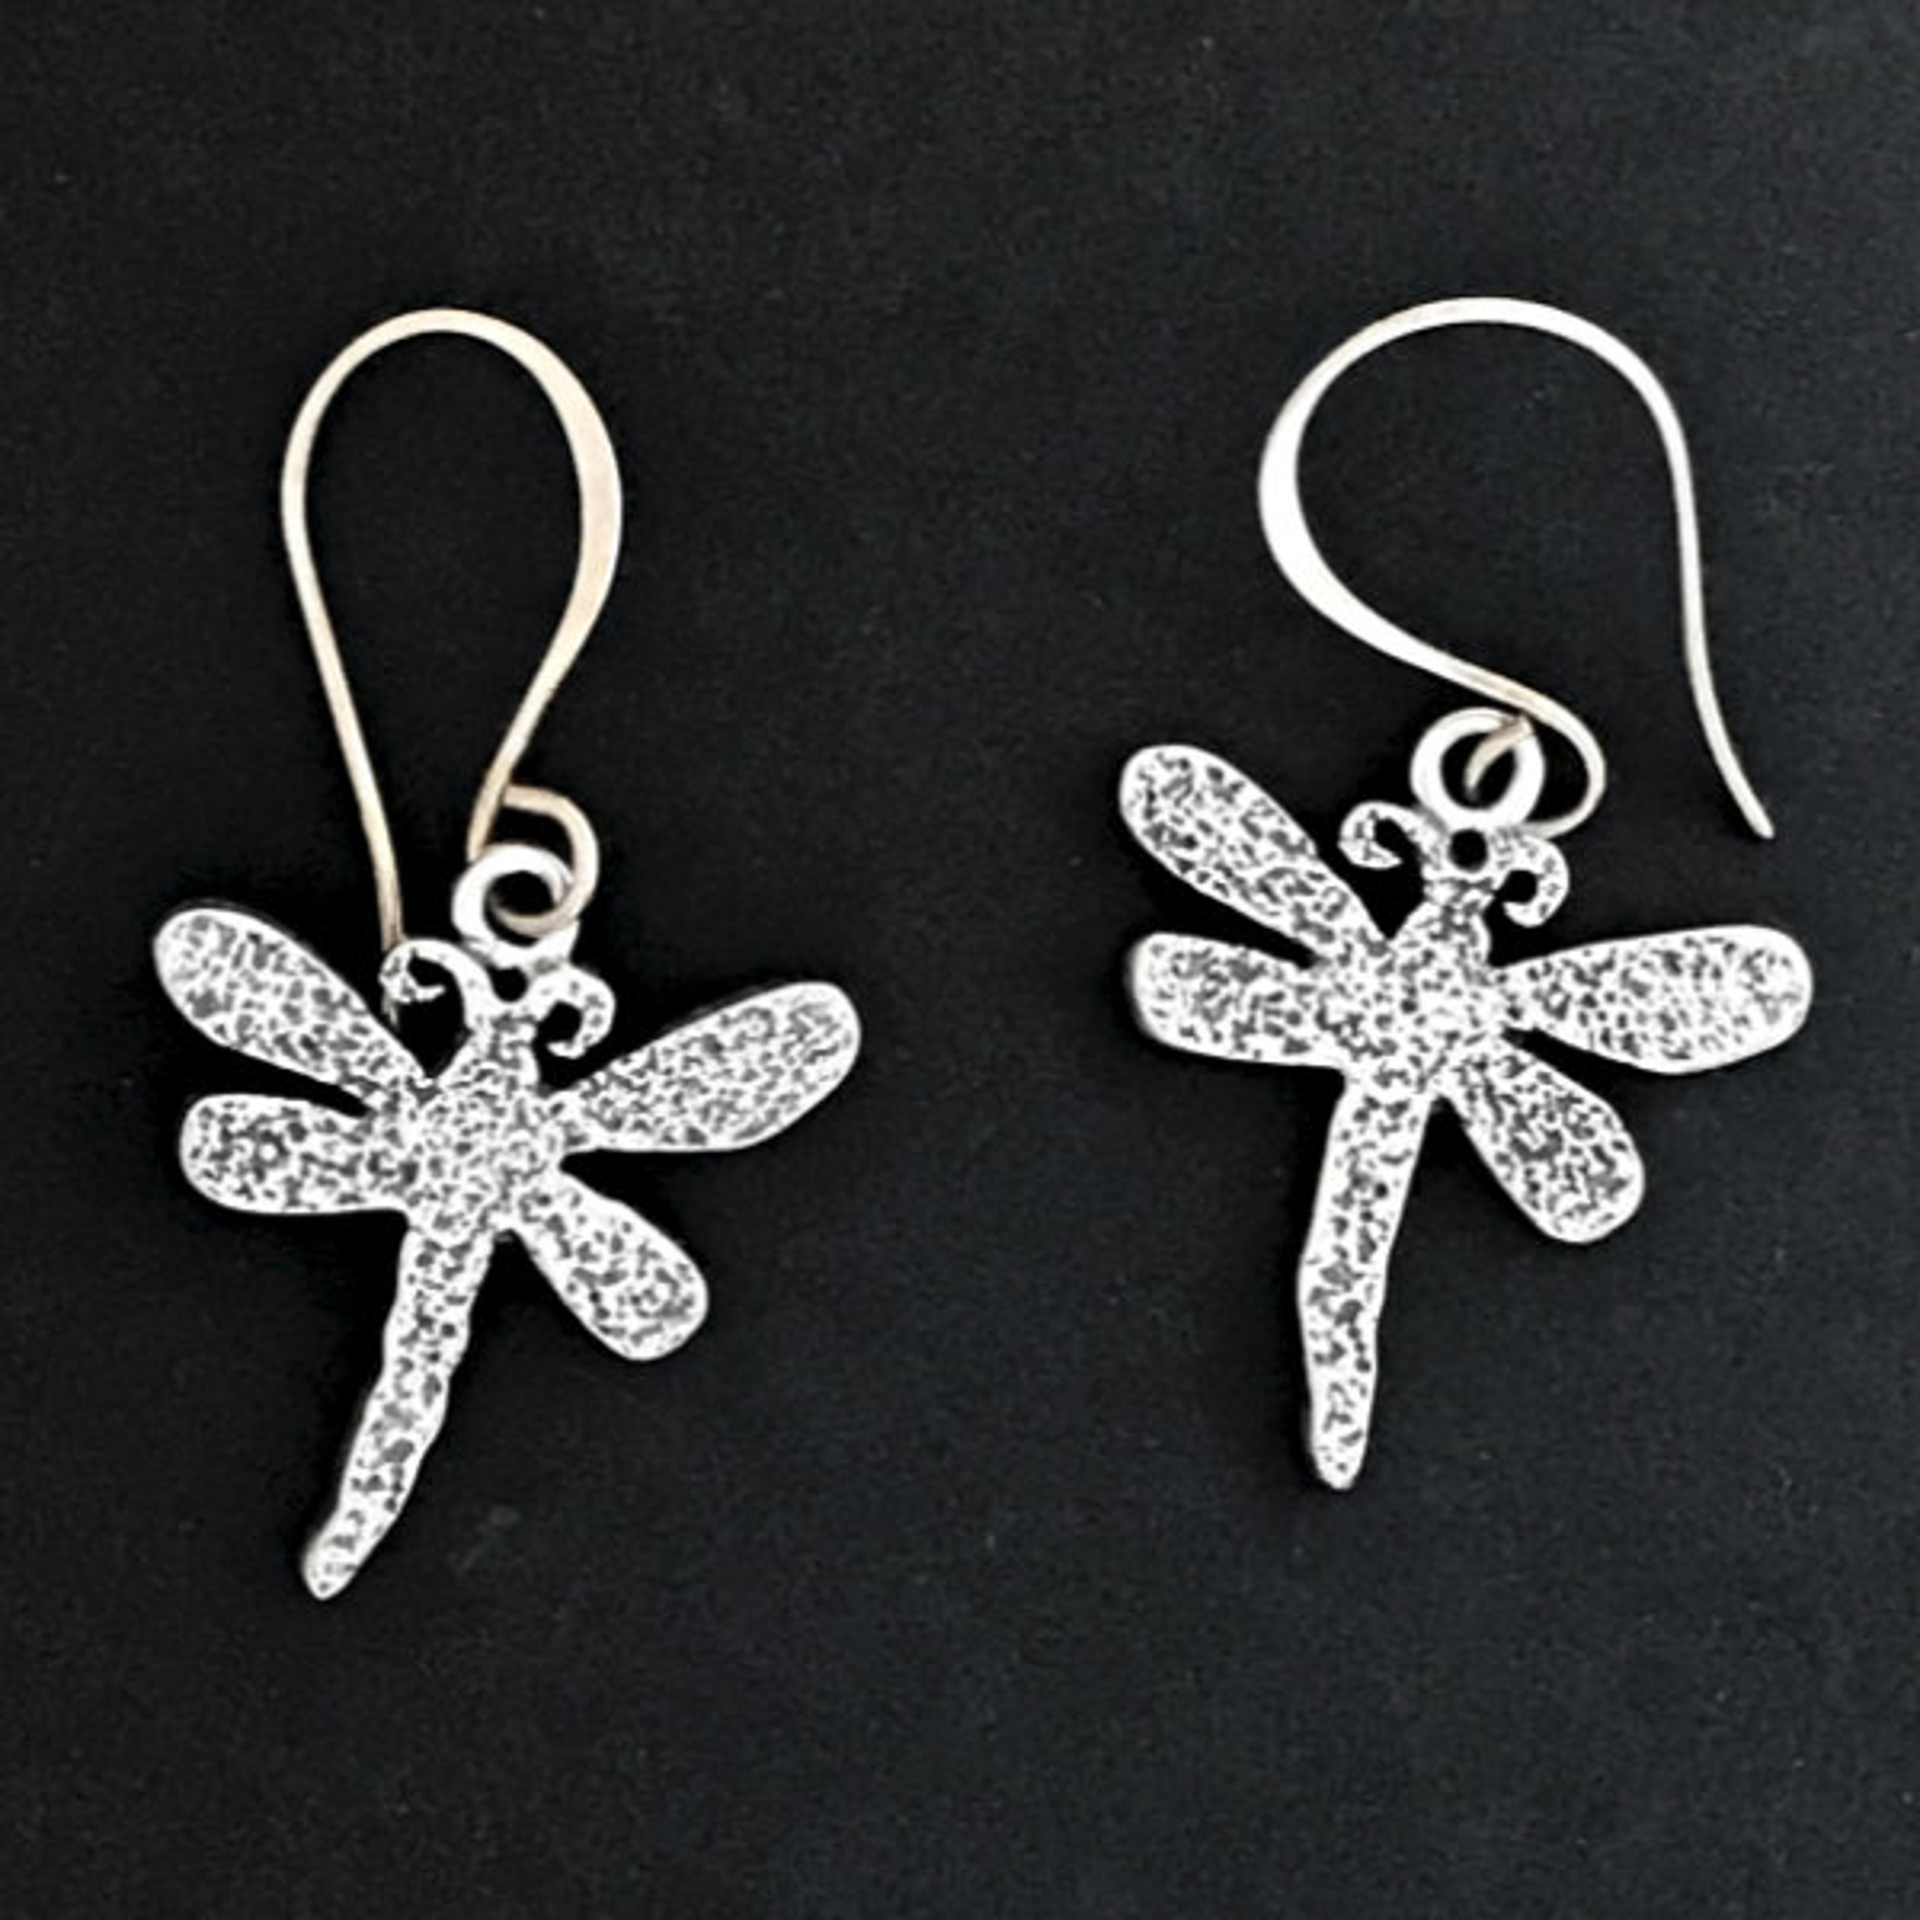 Samantha & Nina Joe dragonfly earrings by Melanie Yazzie